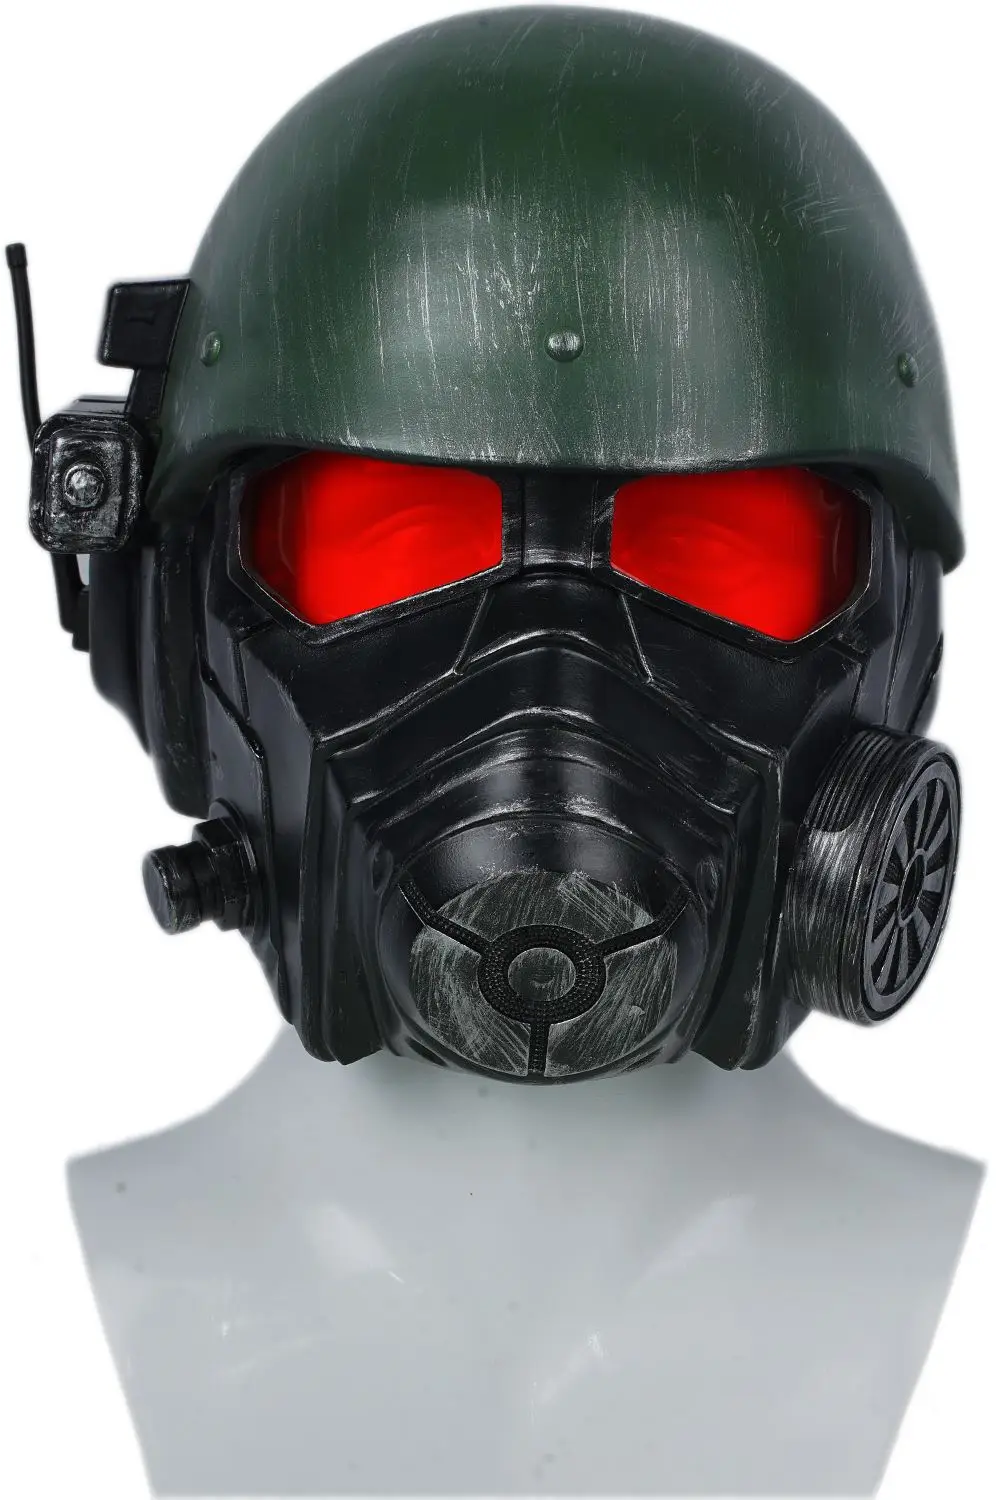 Fallout 4 Veteran Ranger Helmet Game Cosplay Mask Riot Armor Full Head Resin Helmet Halloween Christmas Party Prop Xcoser